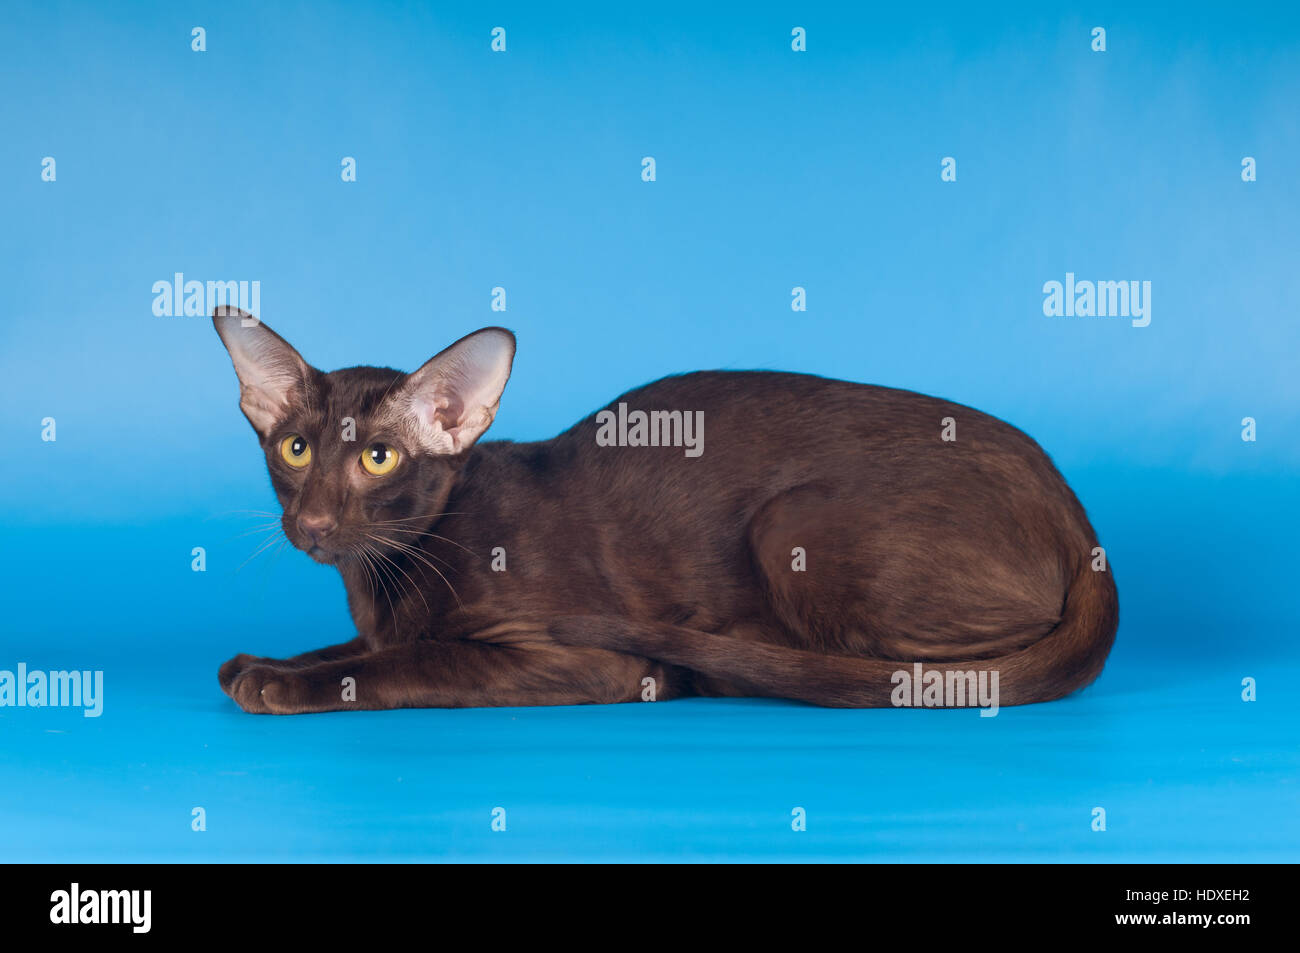 Oriental lying cat portrait on blue background Stock Photo